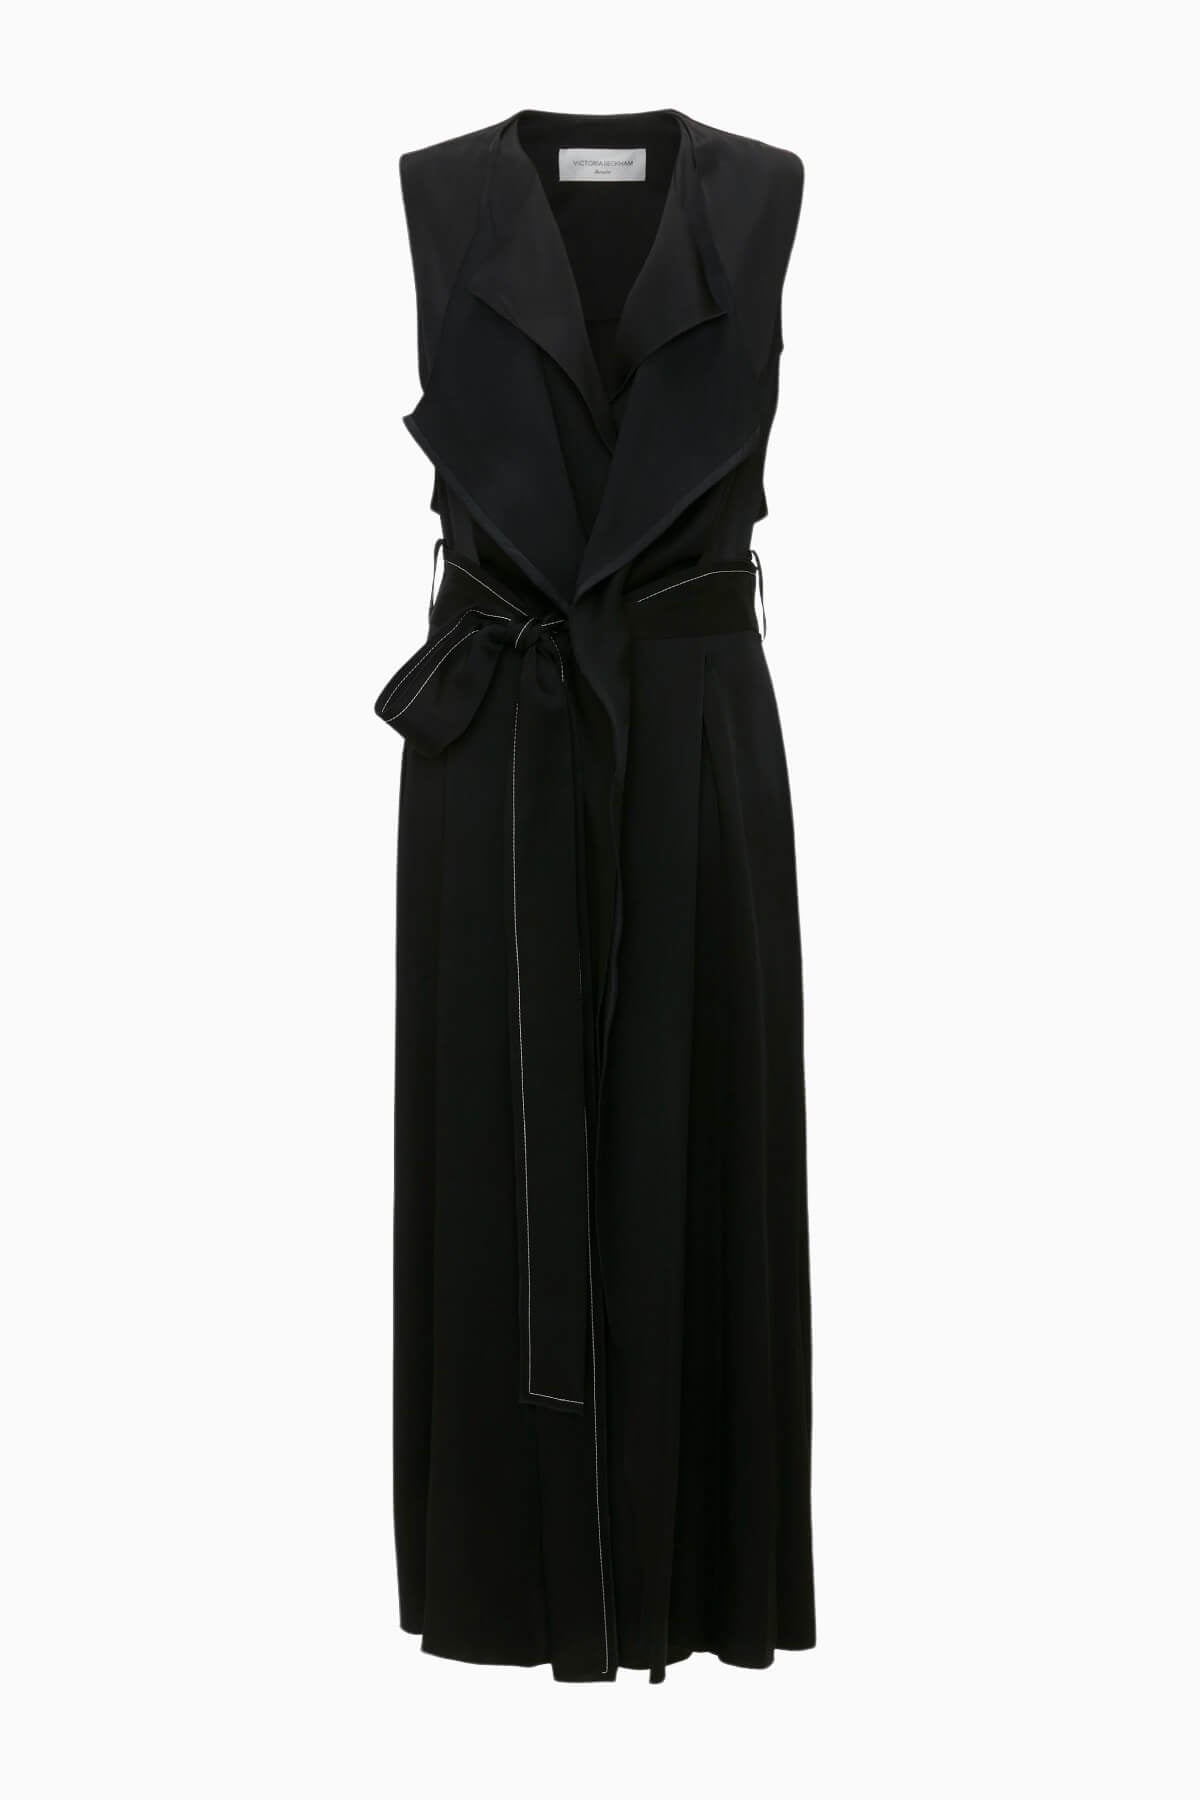 Victoria Beckham Classic Trench Dress - Black